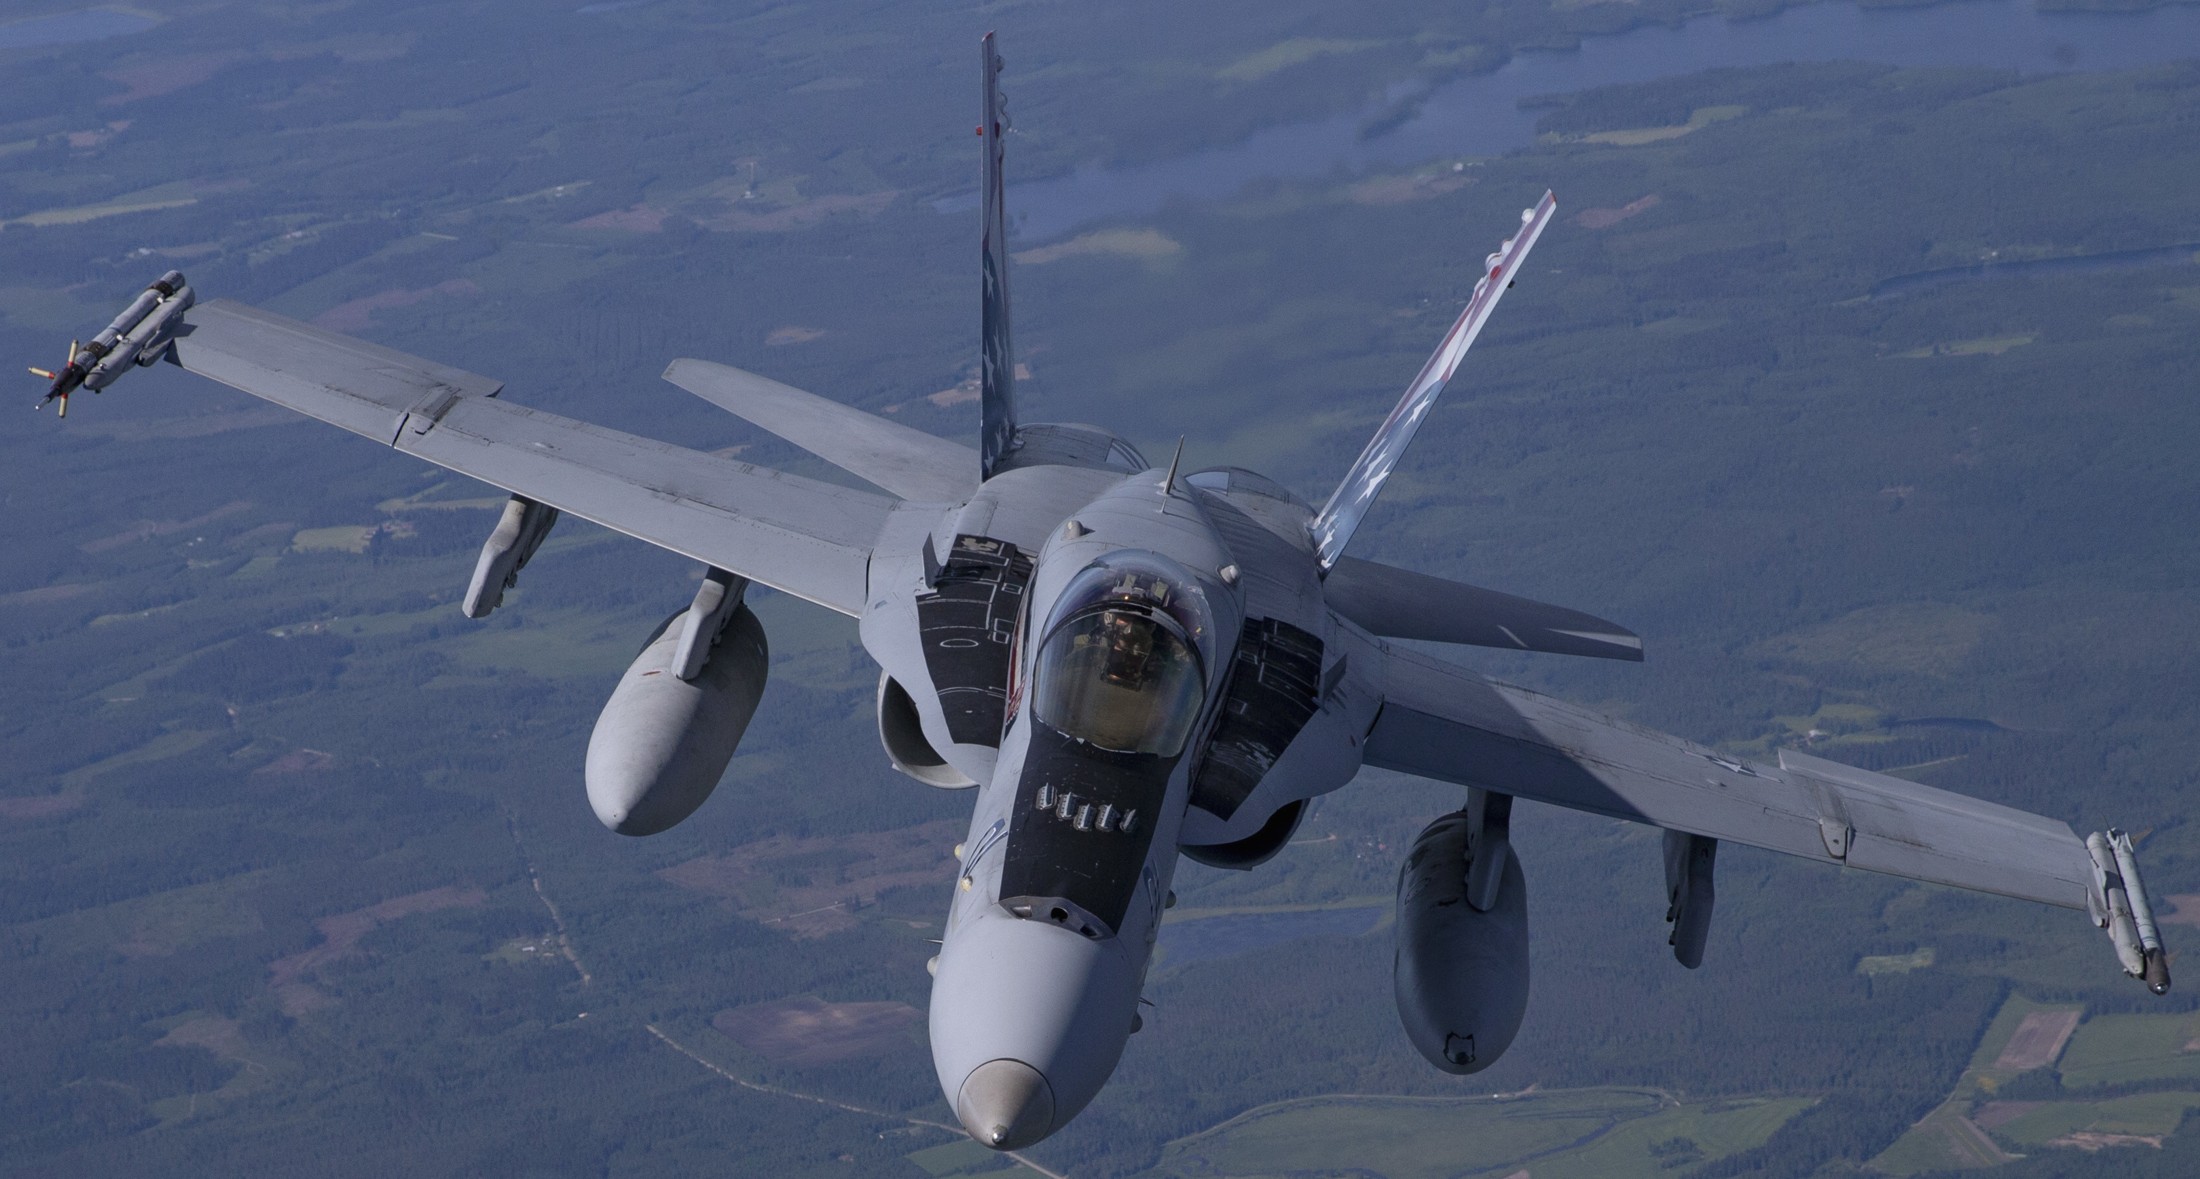 vmfa-115 silver eagles marine fighter attack squadron usmc f/a-18c hornet 231 finnish air force training